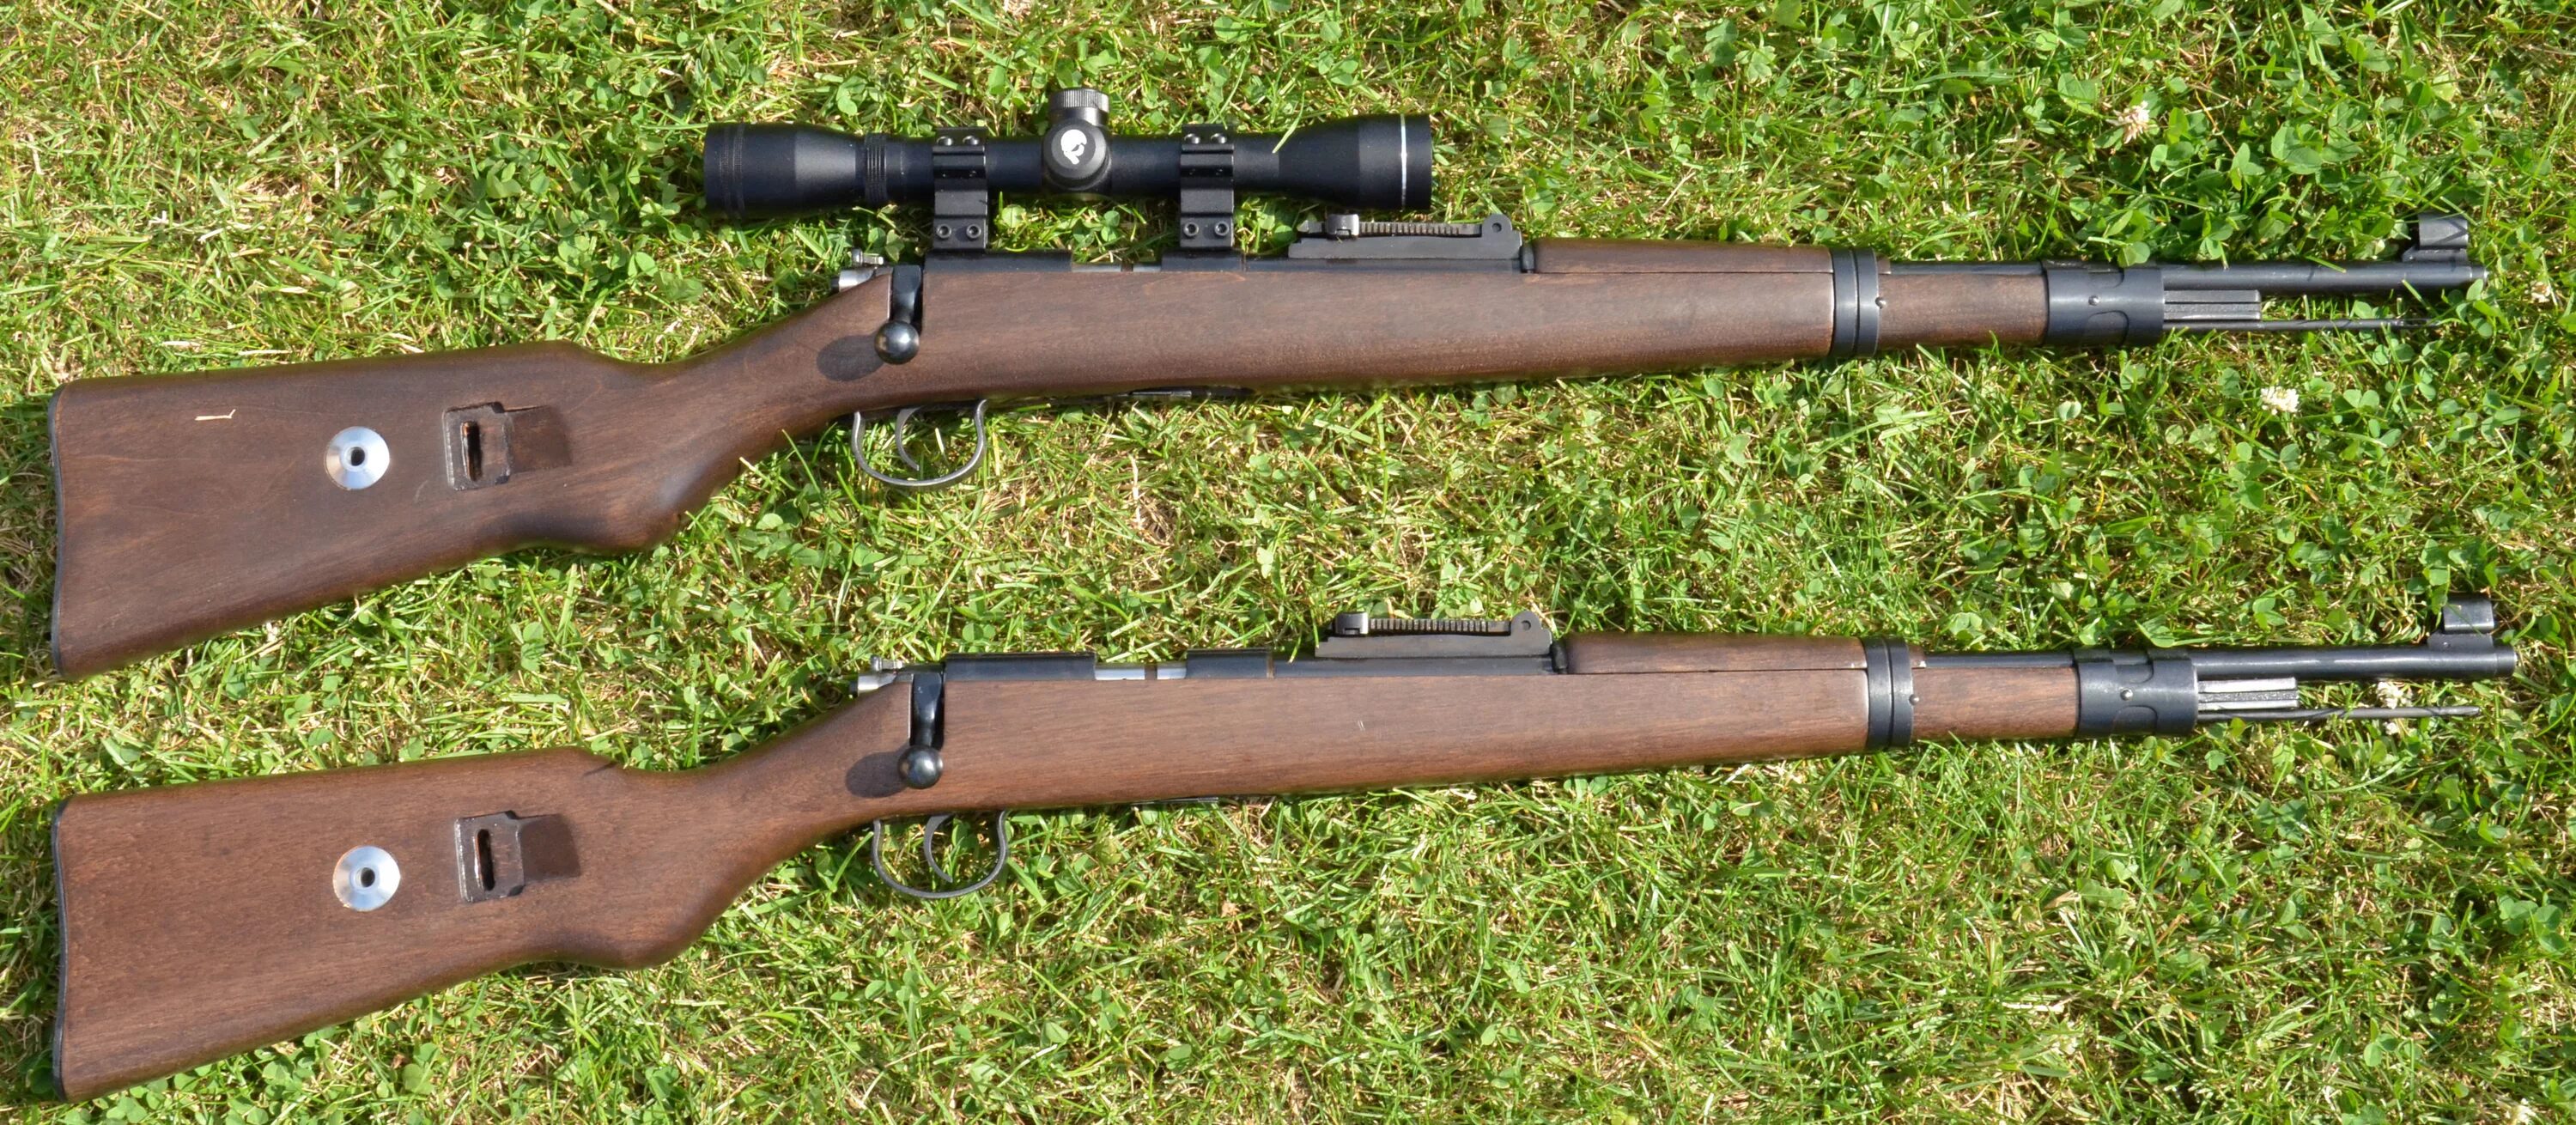 3к цена. Mauser kar98k. Mauser 98. Снайперская винтовка Маузер 98к. Винтовка Mauser 98k.